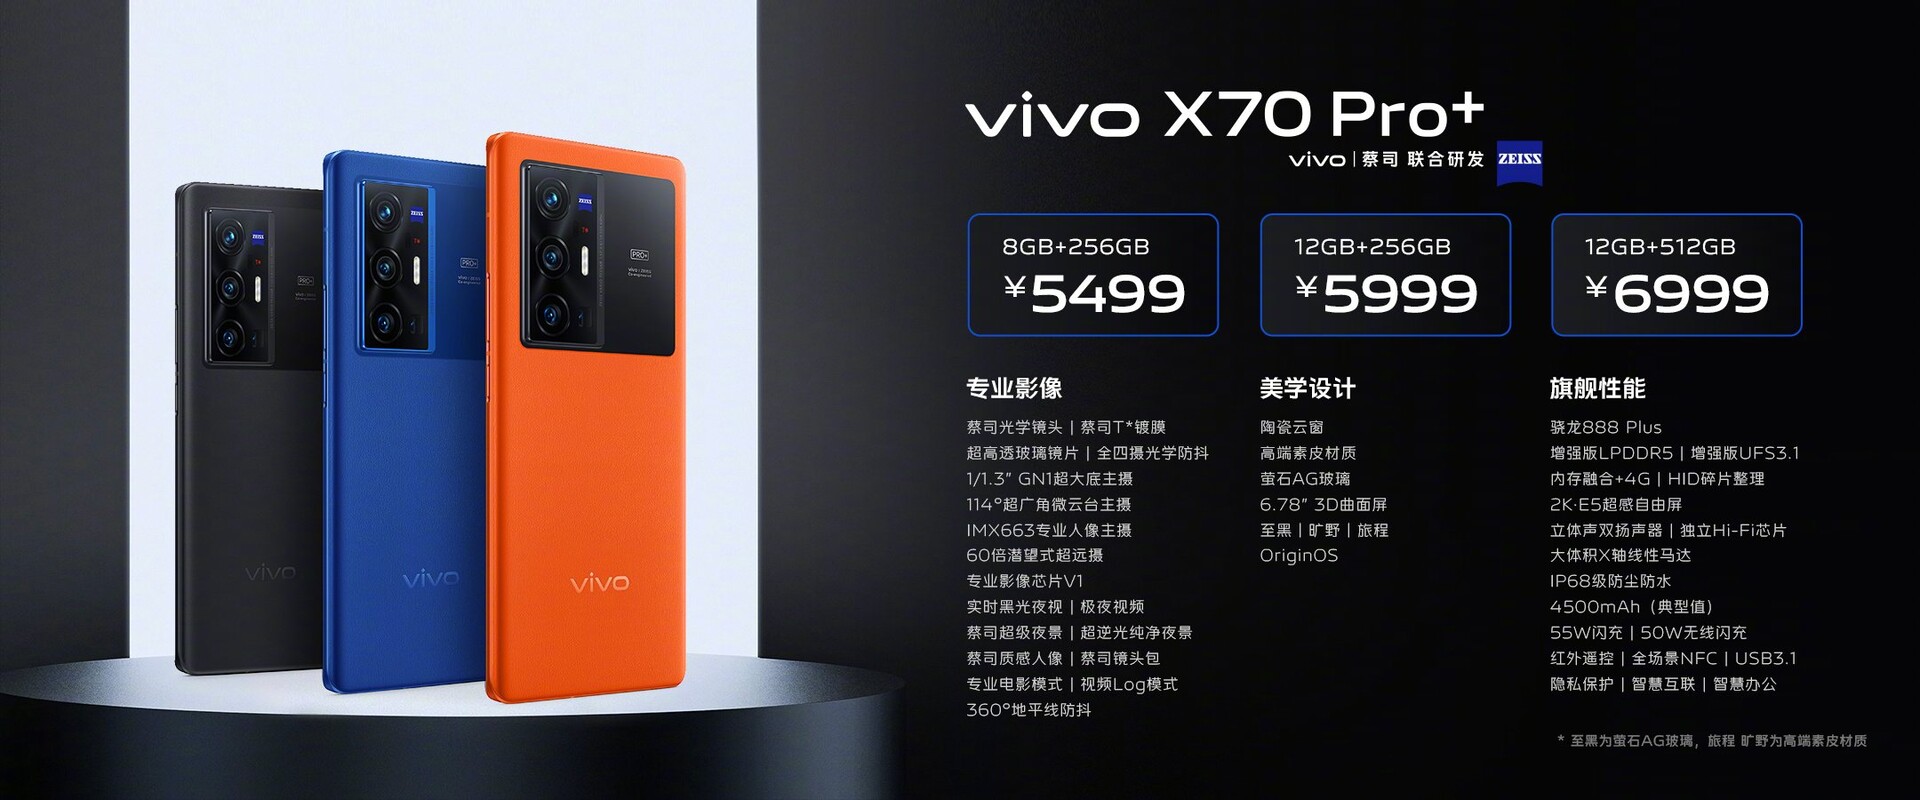 Vivo x100 pro в россии. X70pro+. X70 Pro Plus. Vivo x70 Pro Plus характеристики. X70 Pro.